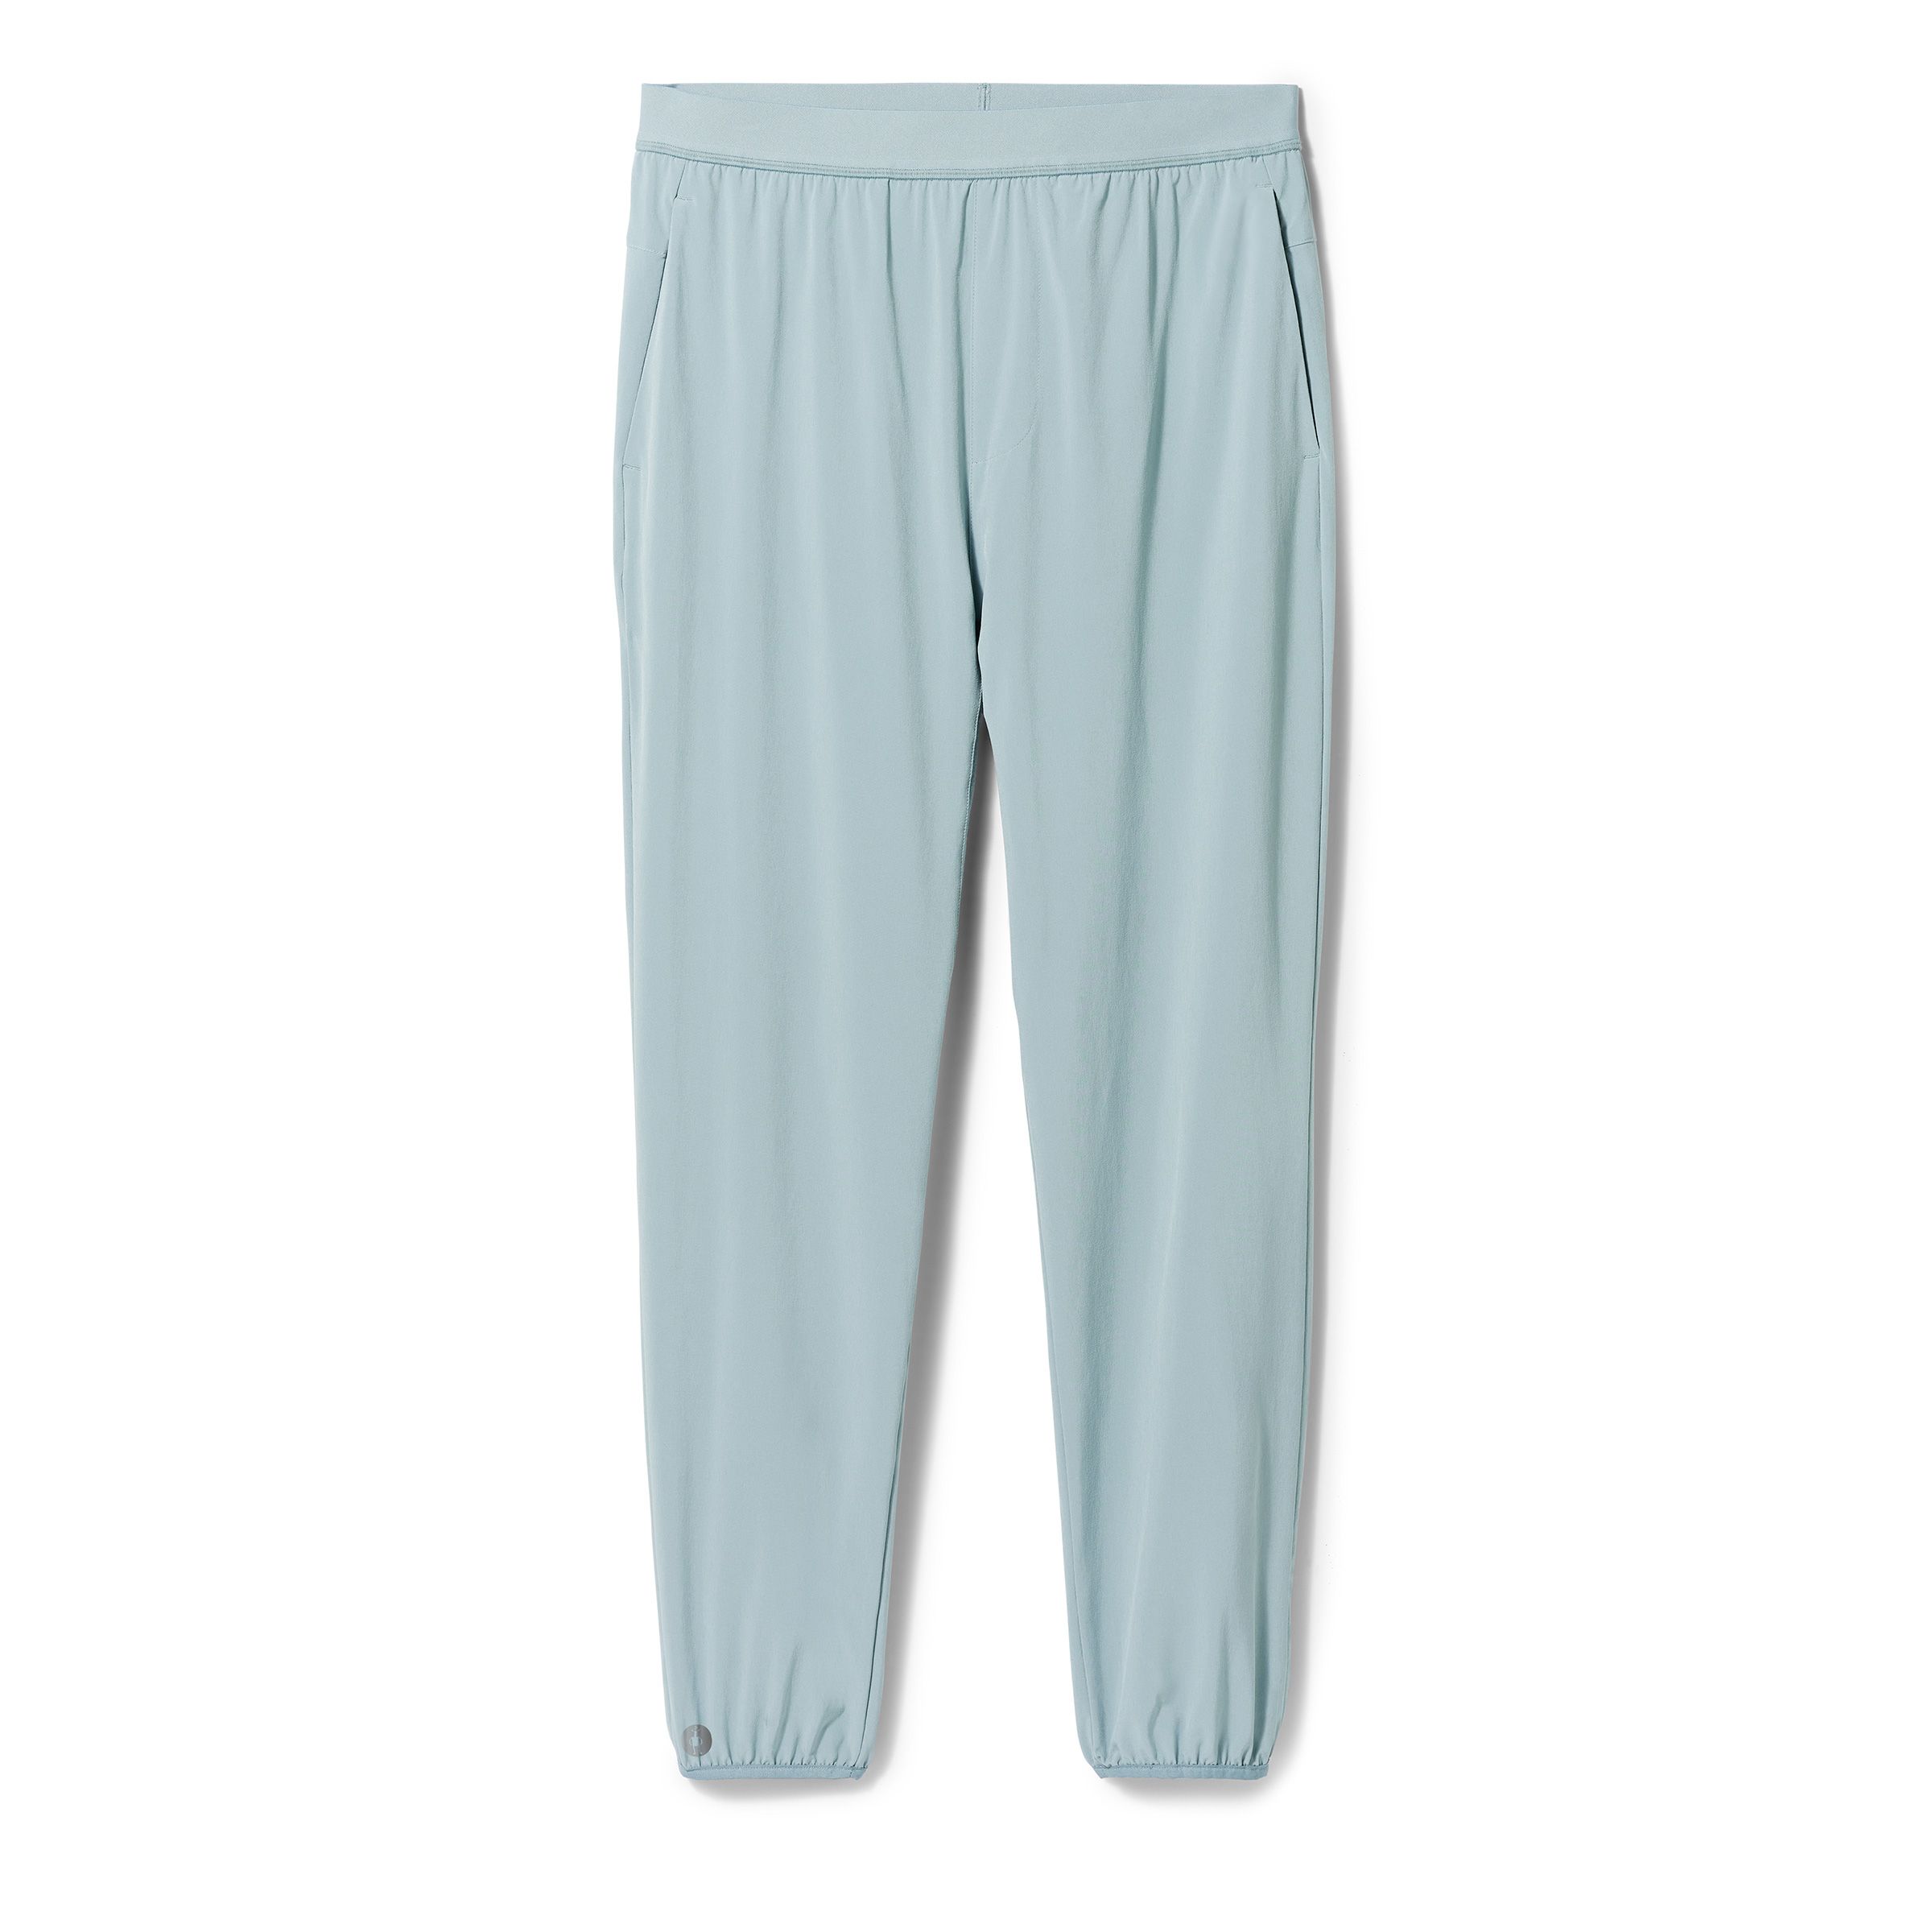 Aayomet Pants For Men Men's Sweatpants, EcoSmart Sweatpants for Men, Men's  Lounge Pants with Cinched Cuffs,Dark Gray M 